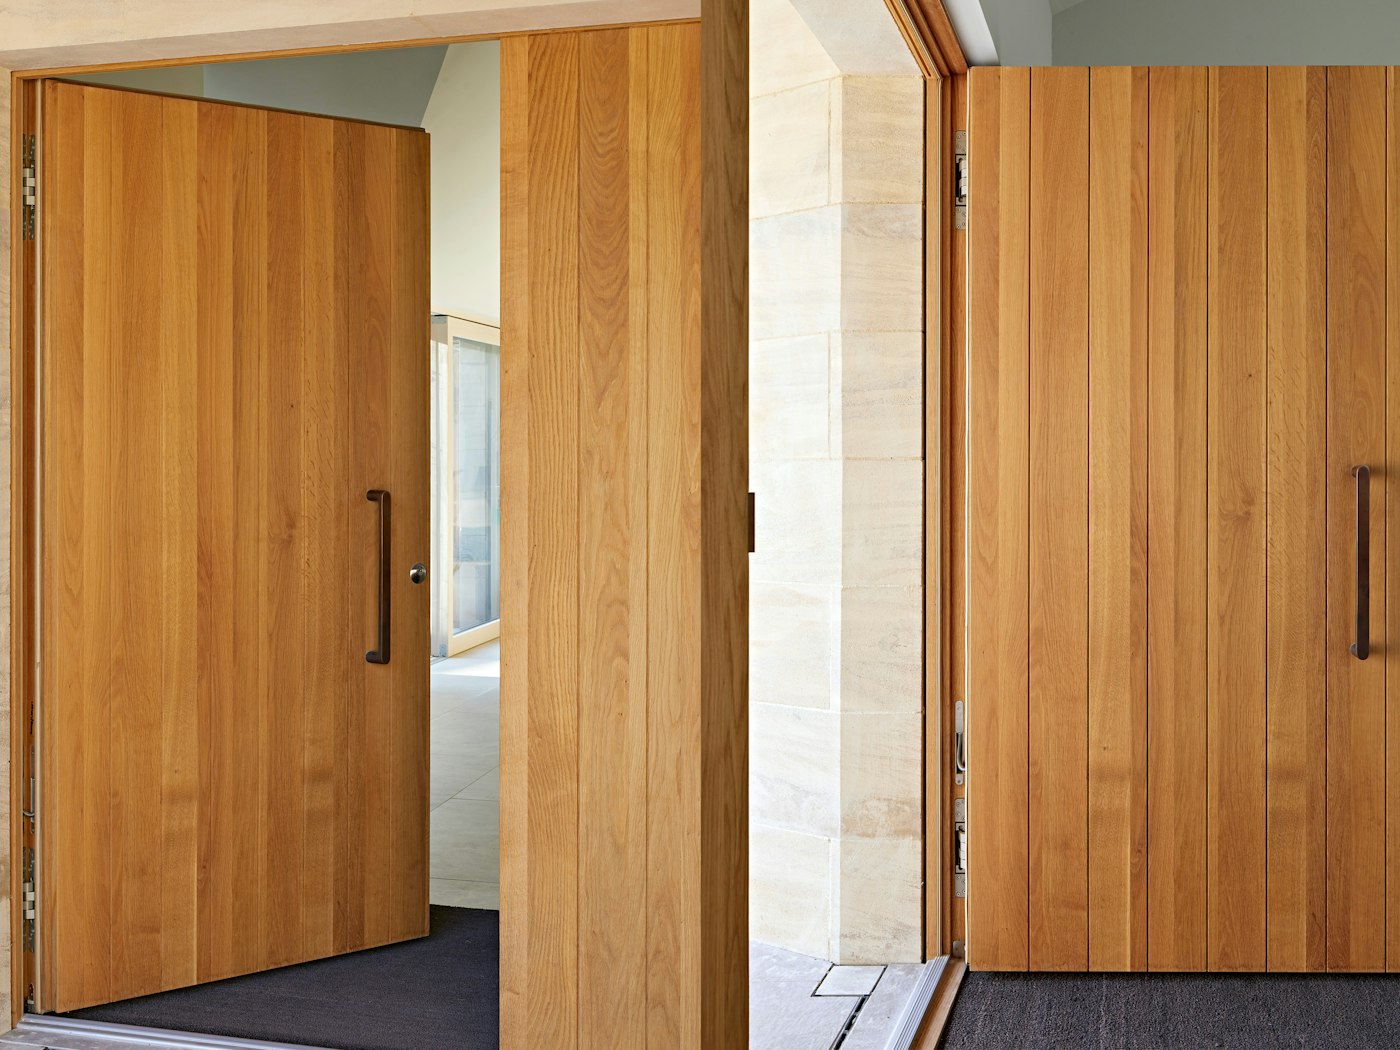 Maintaining ultra-minimalism, the door frame is hidden in the walls